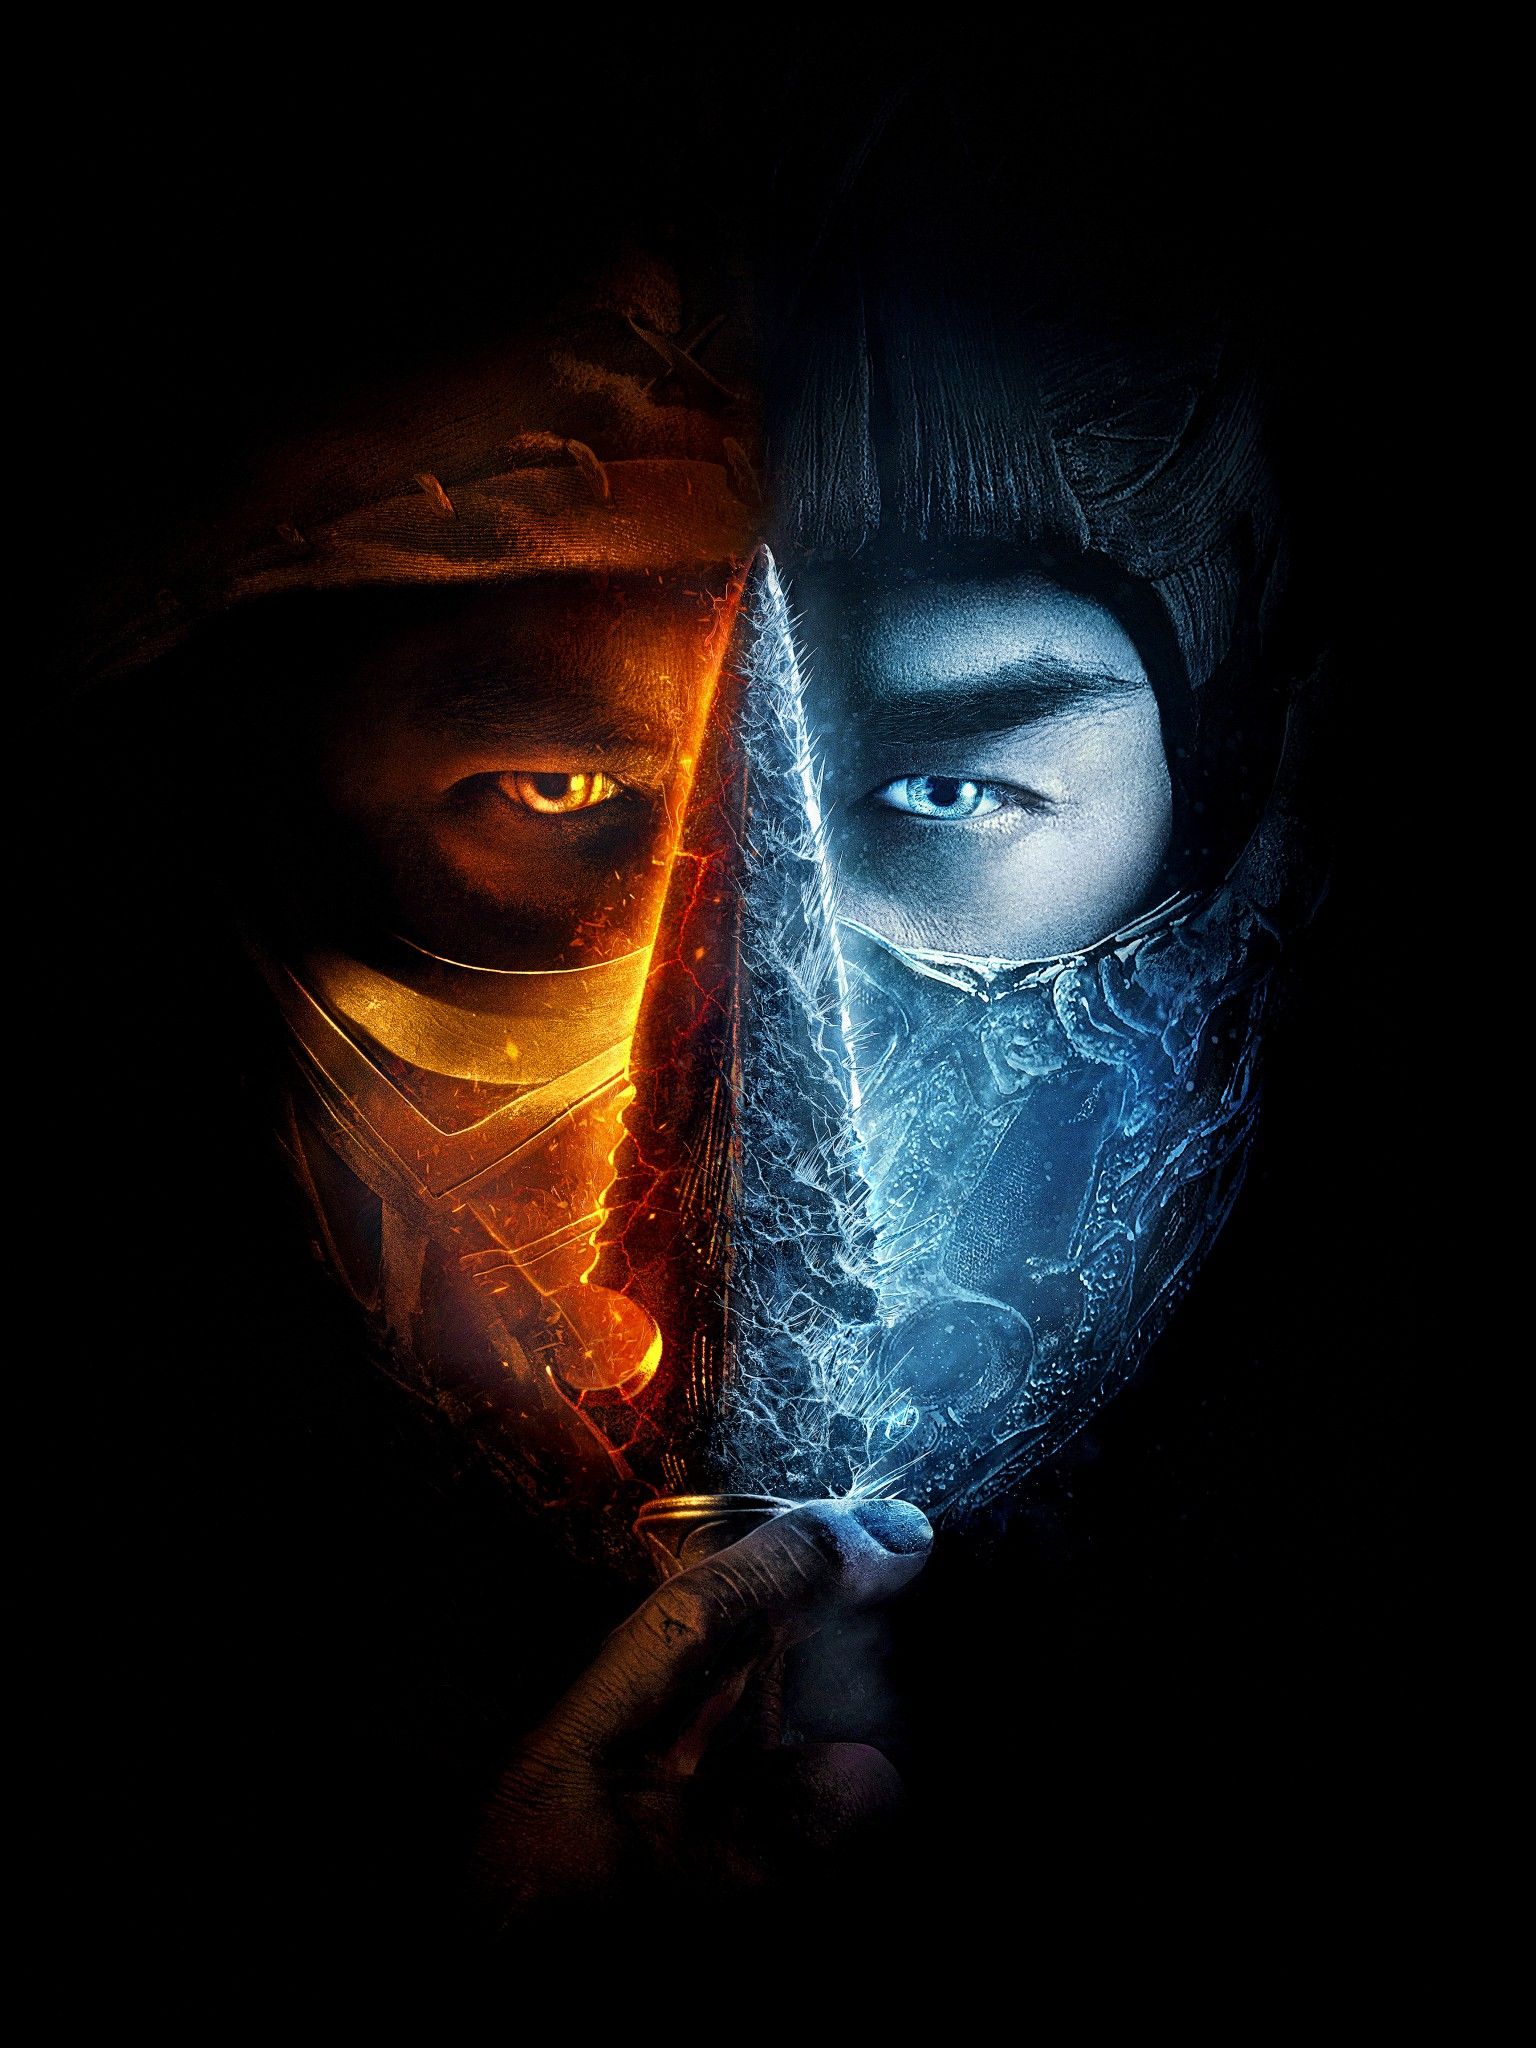 Mortal Kombat Wallpaper 4K, 2021 Movies, Scorpion, Sub Zero, Black Dark